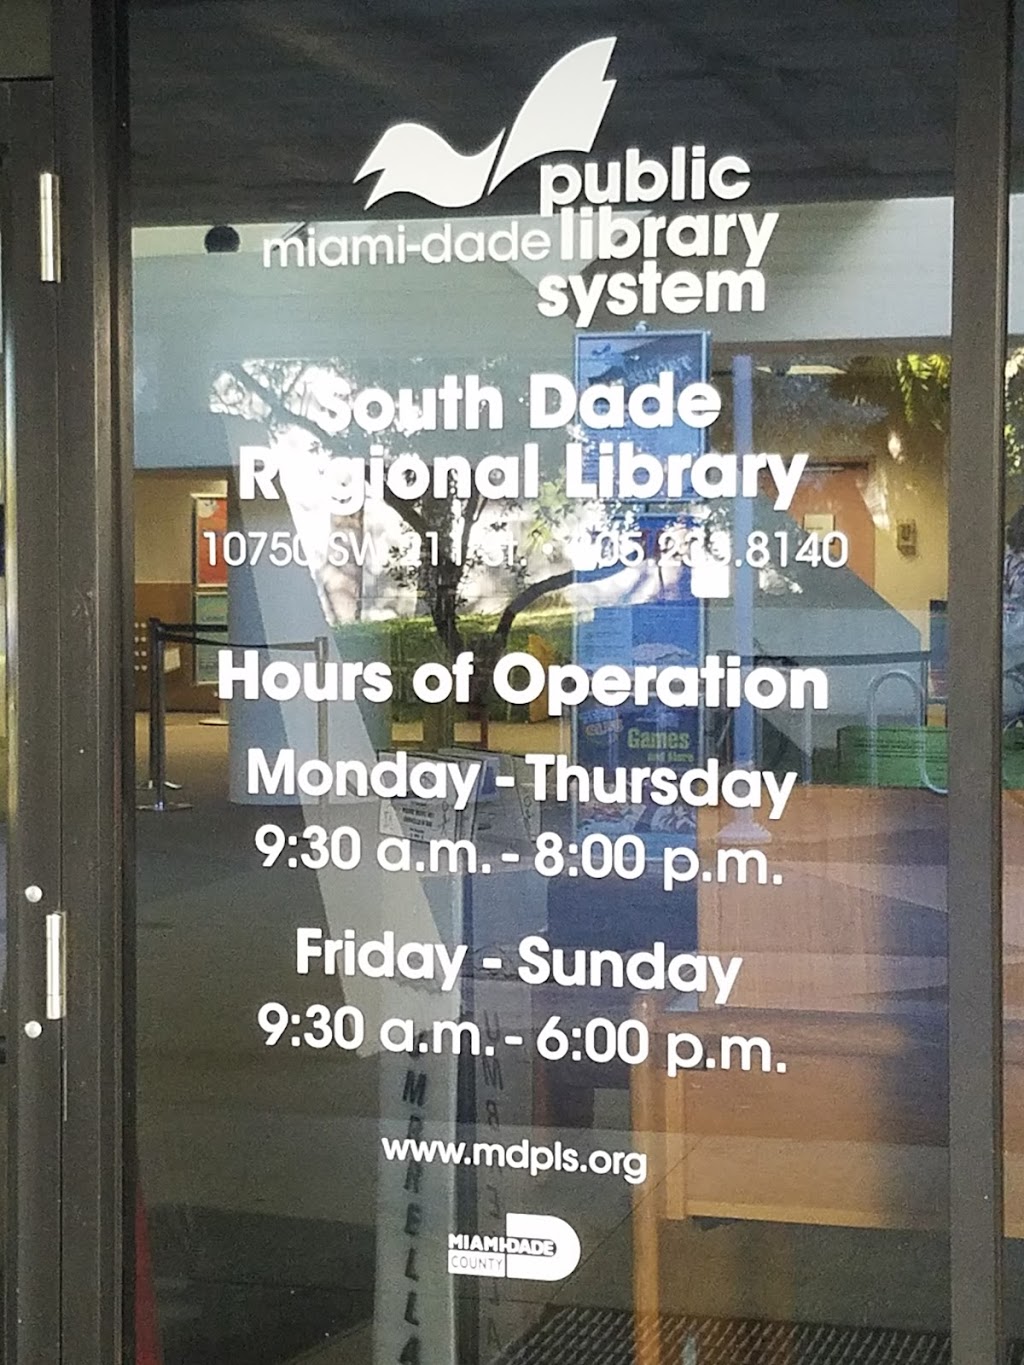 South Dade Regional Library | 10750 SW 211 St, Cutler Bay, FL 33189 | Phone: (305) 233-8140